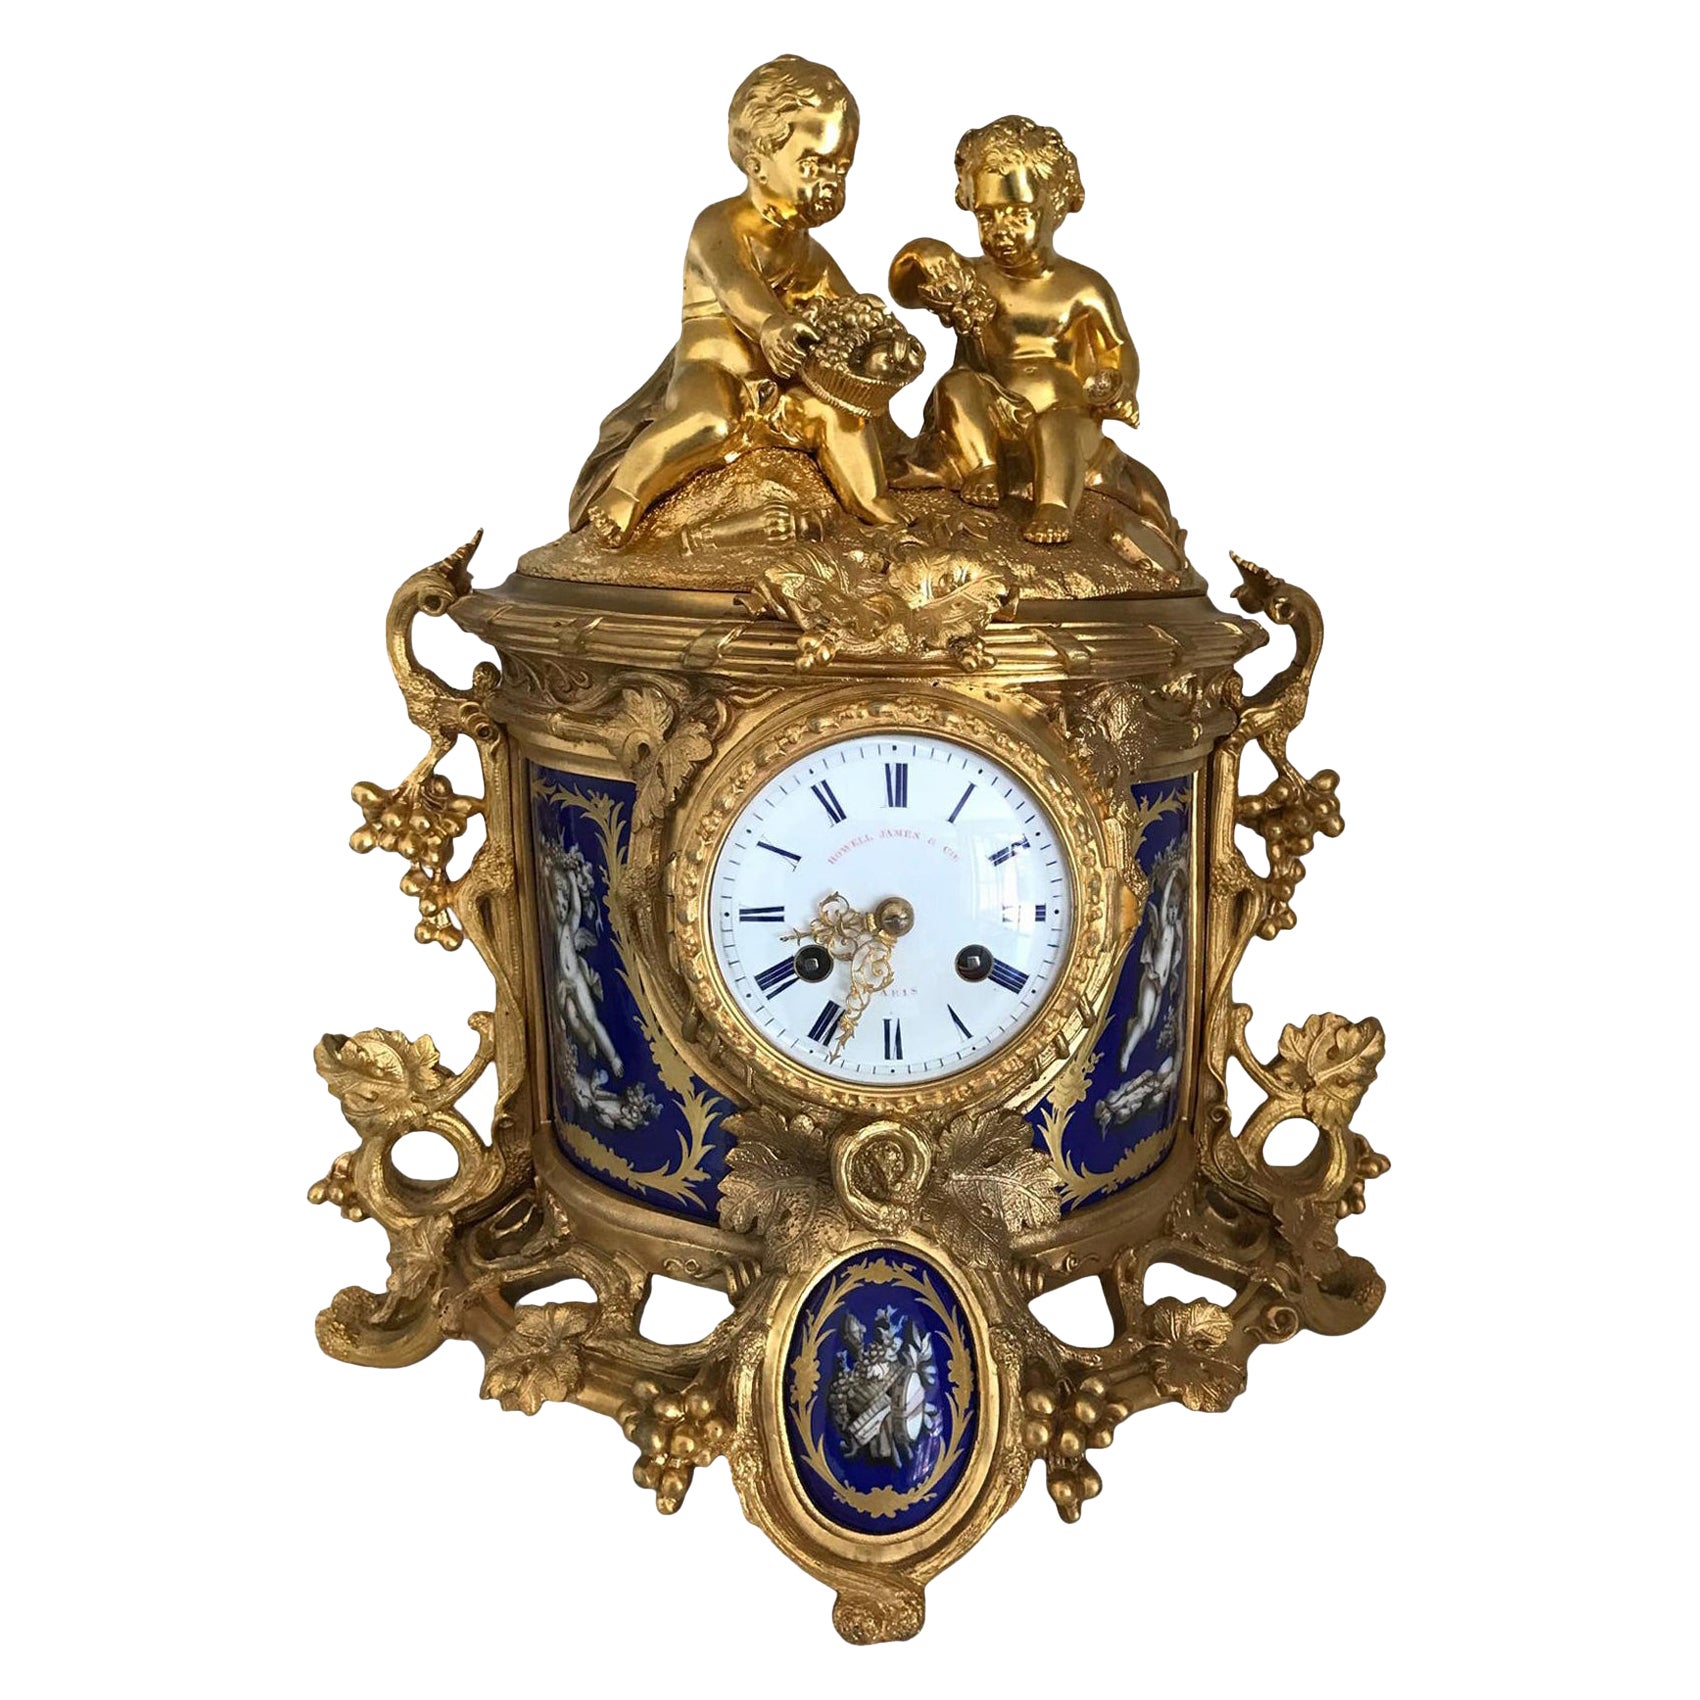 Reloj de chimenea de bronce, vendido por Howell James Londres y París, siglo XIX